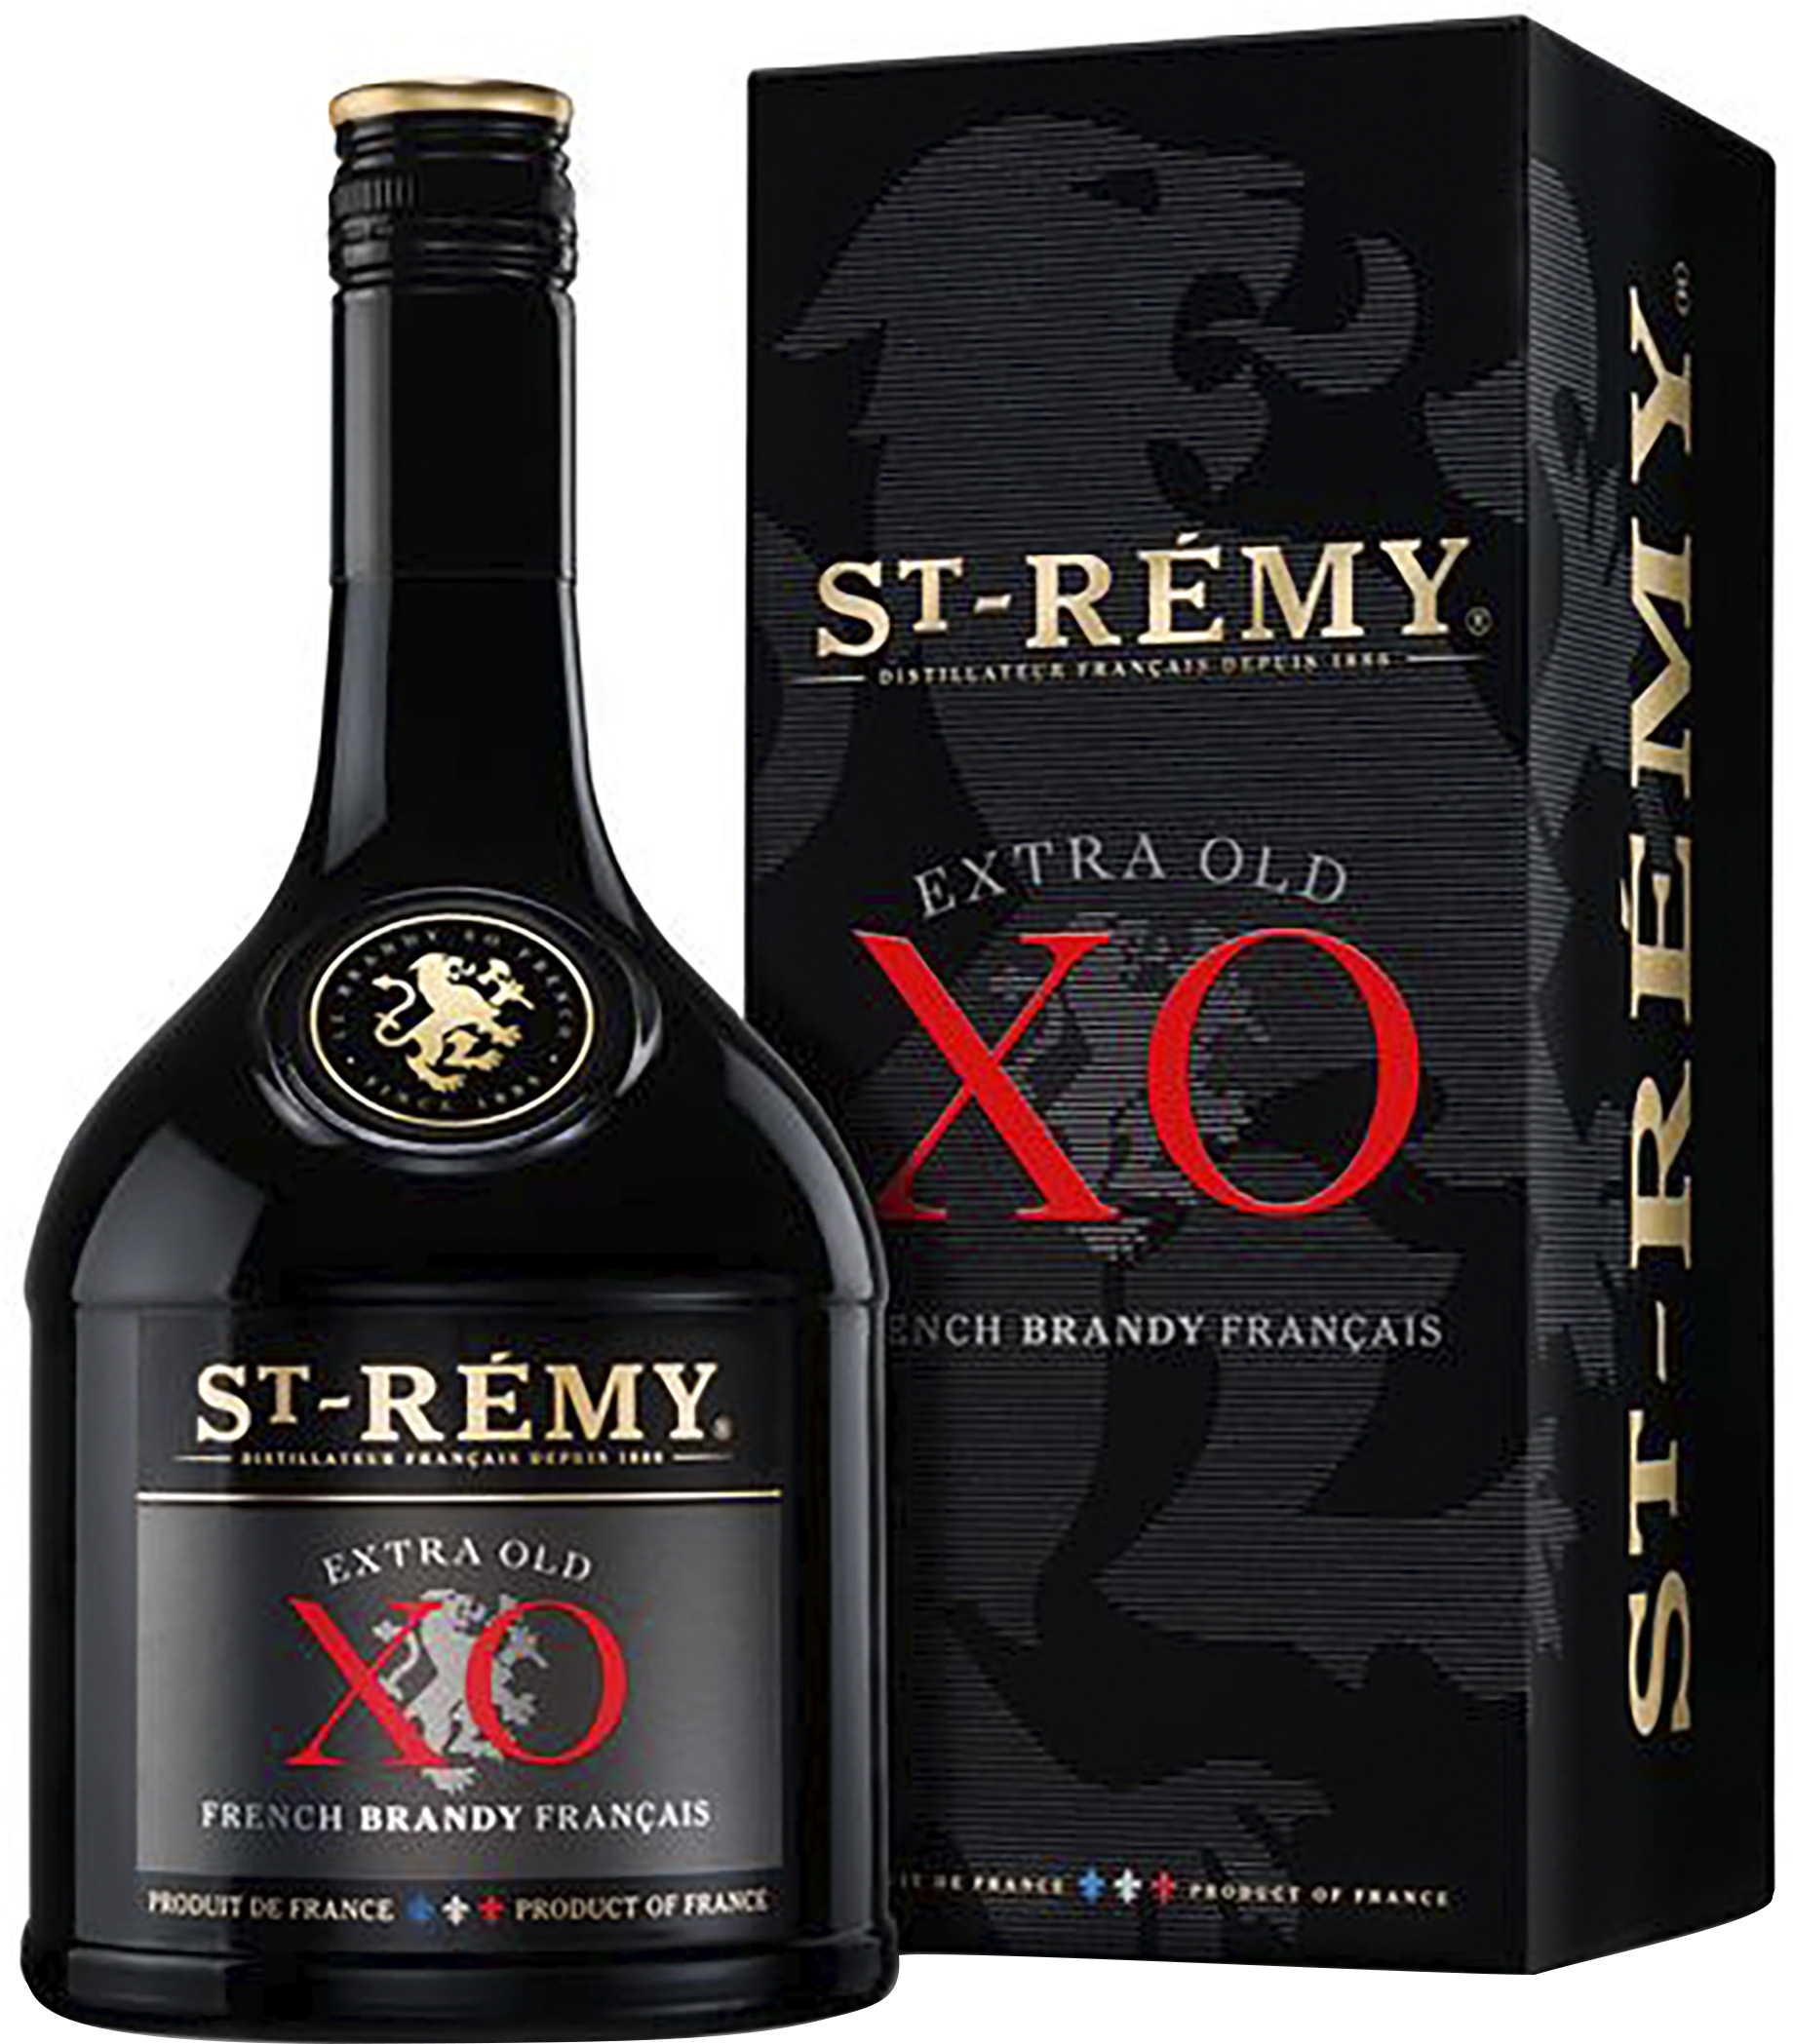 St-Rémy XO